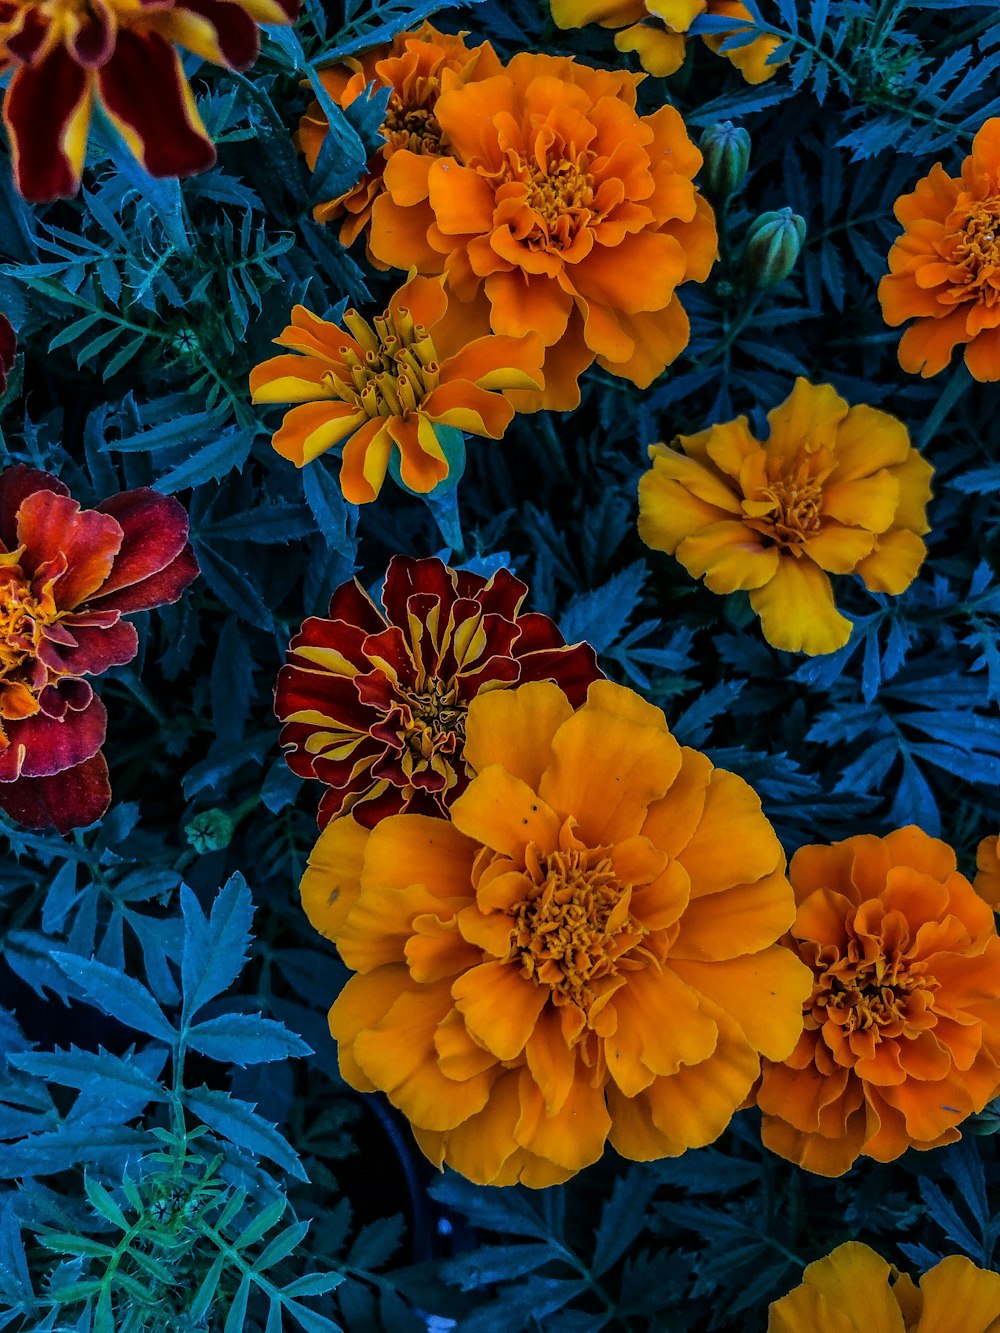 fleurs de souci orange en fleurs